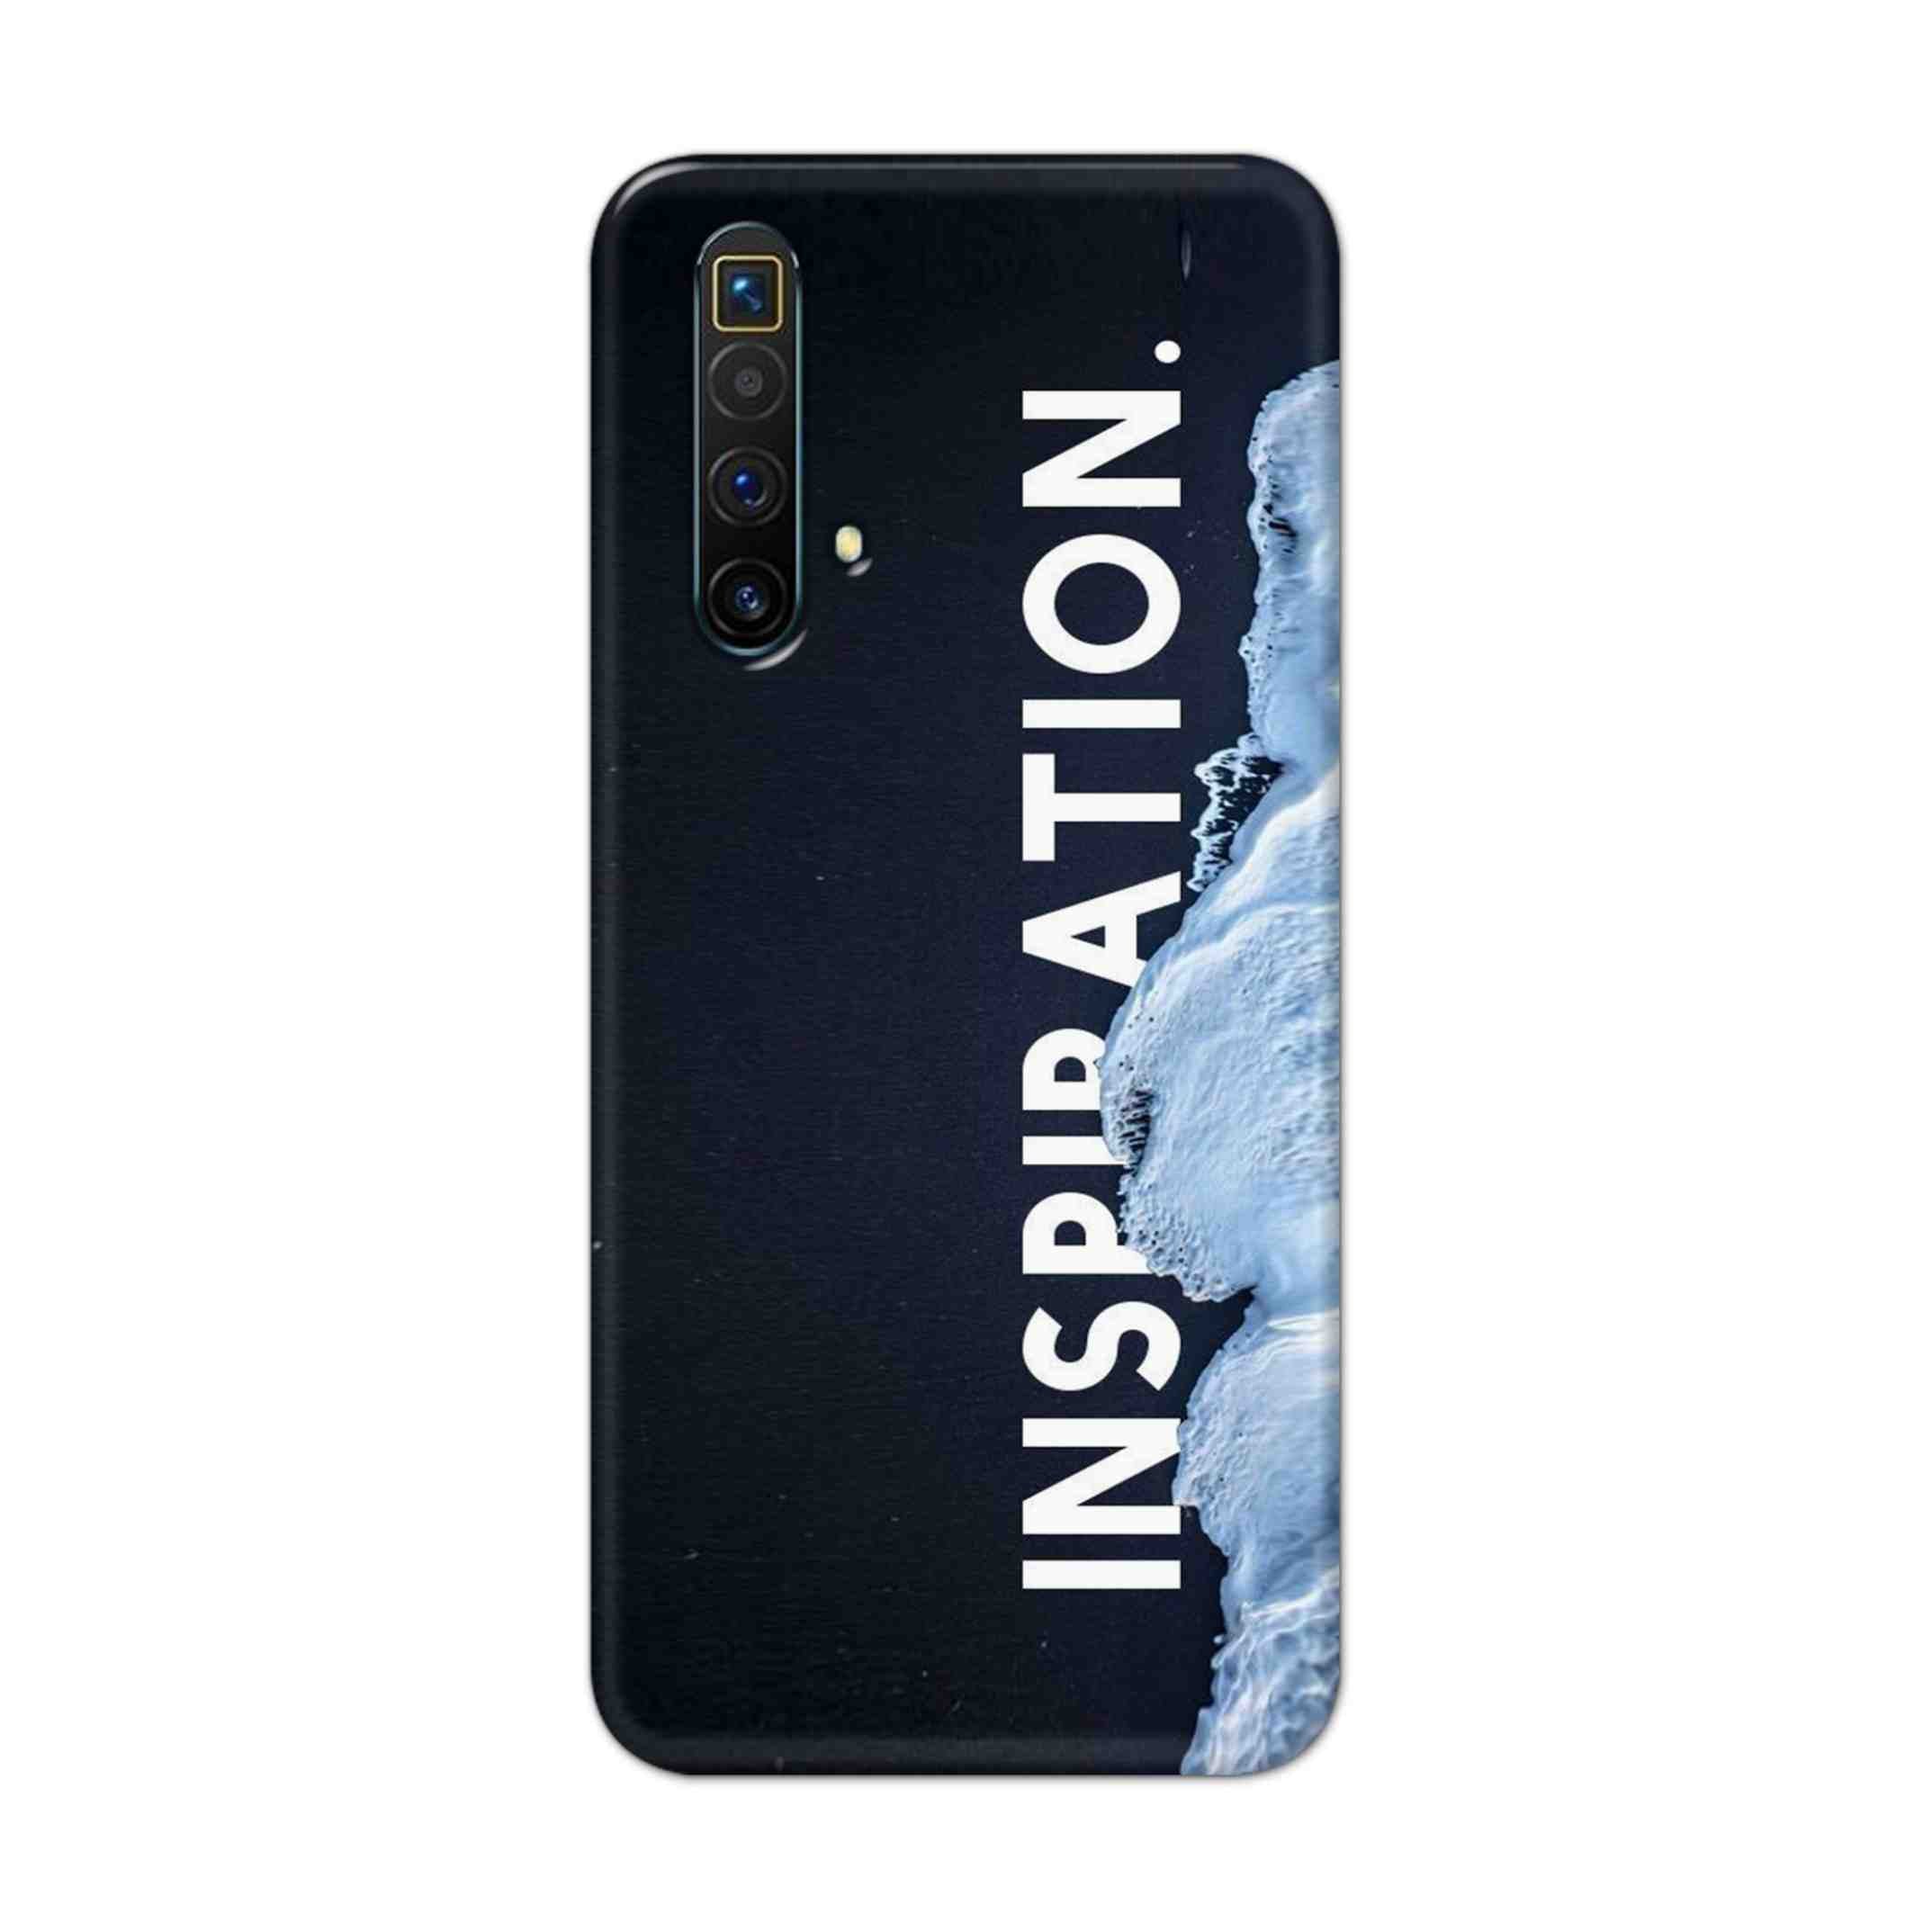 Buy Inspiration Hard Back Mobile Phone Case Cover For Oppo Realme X3 Online